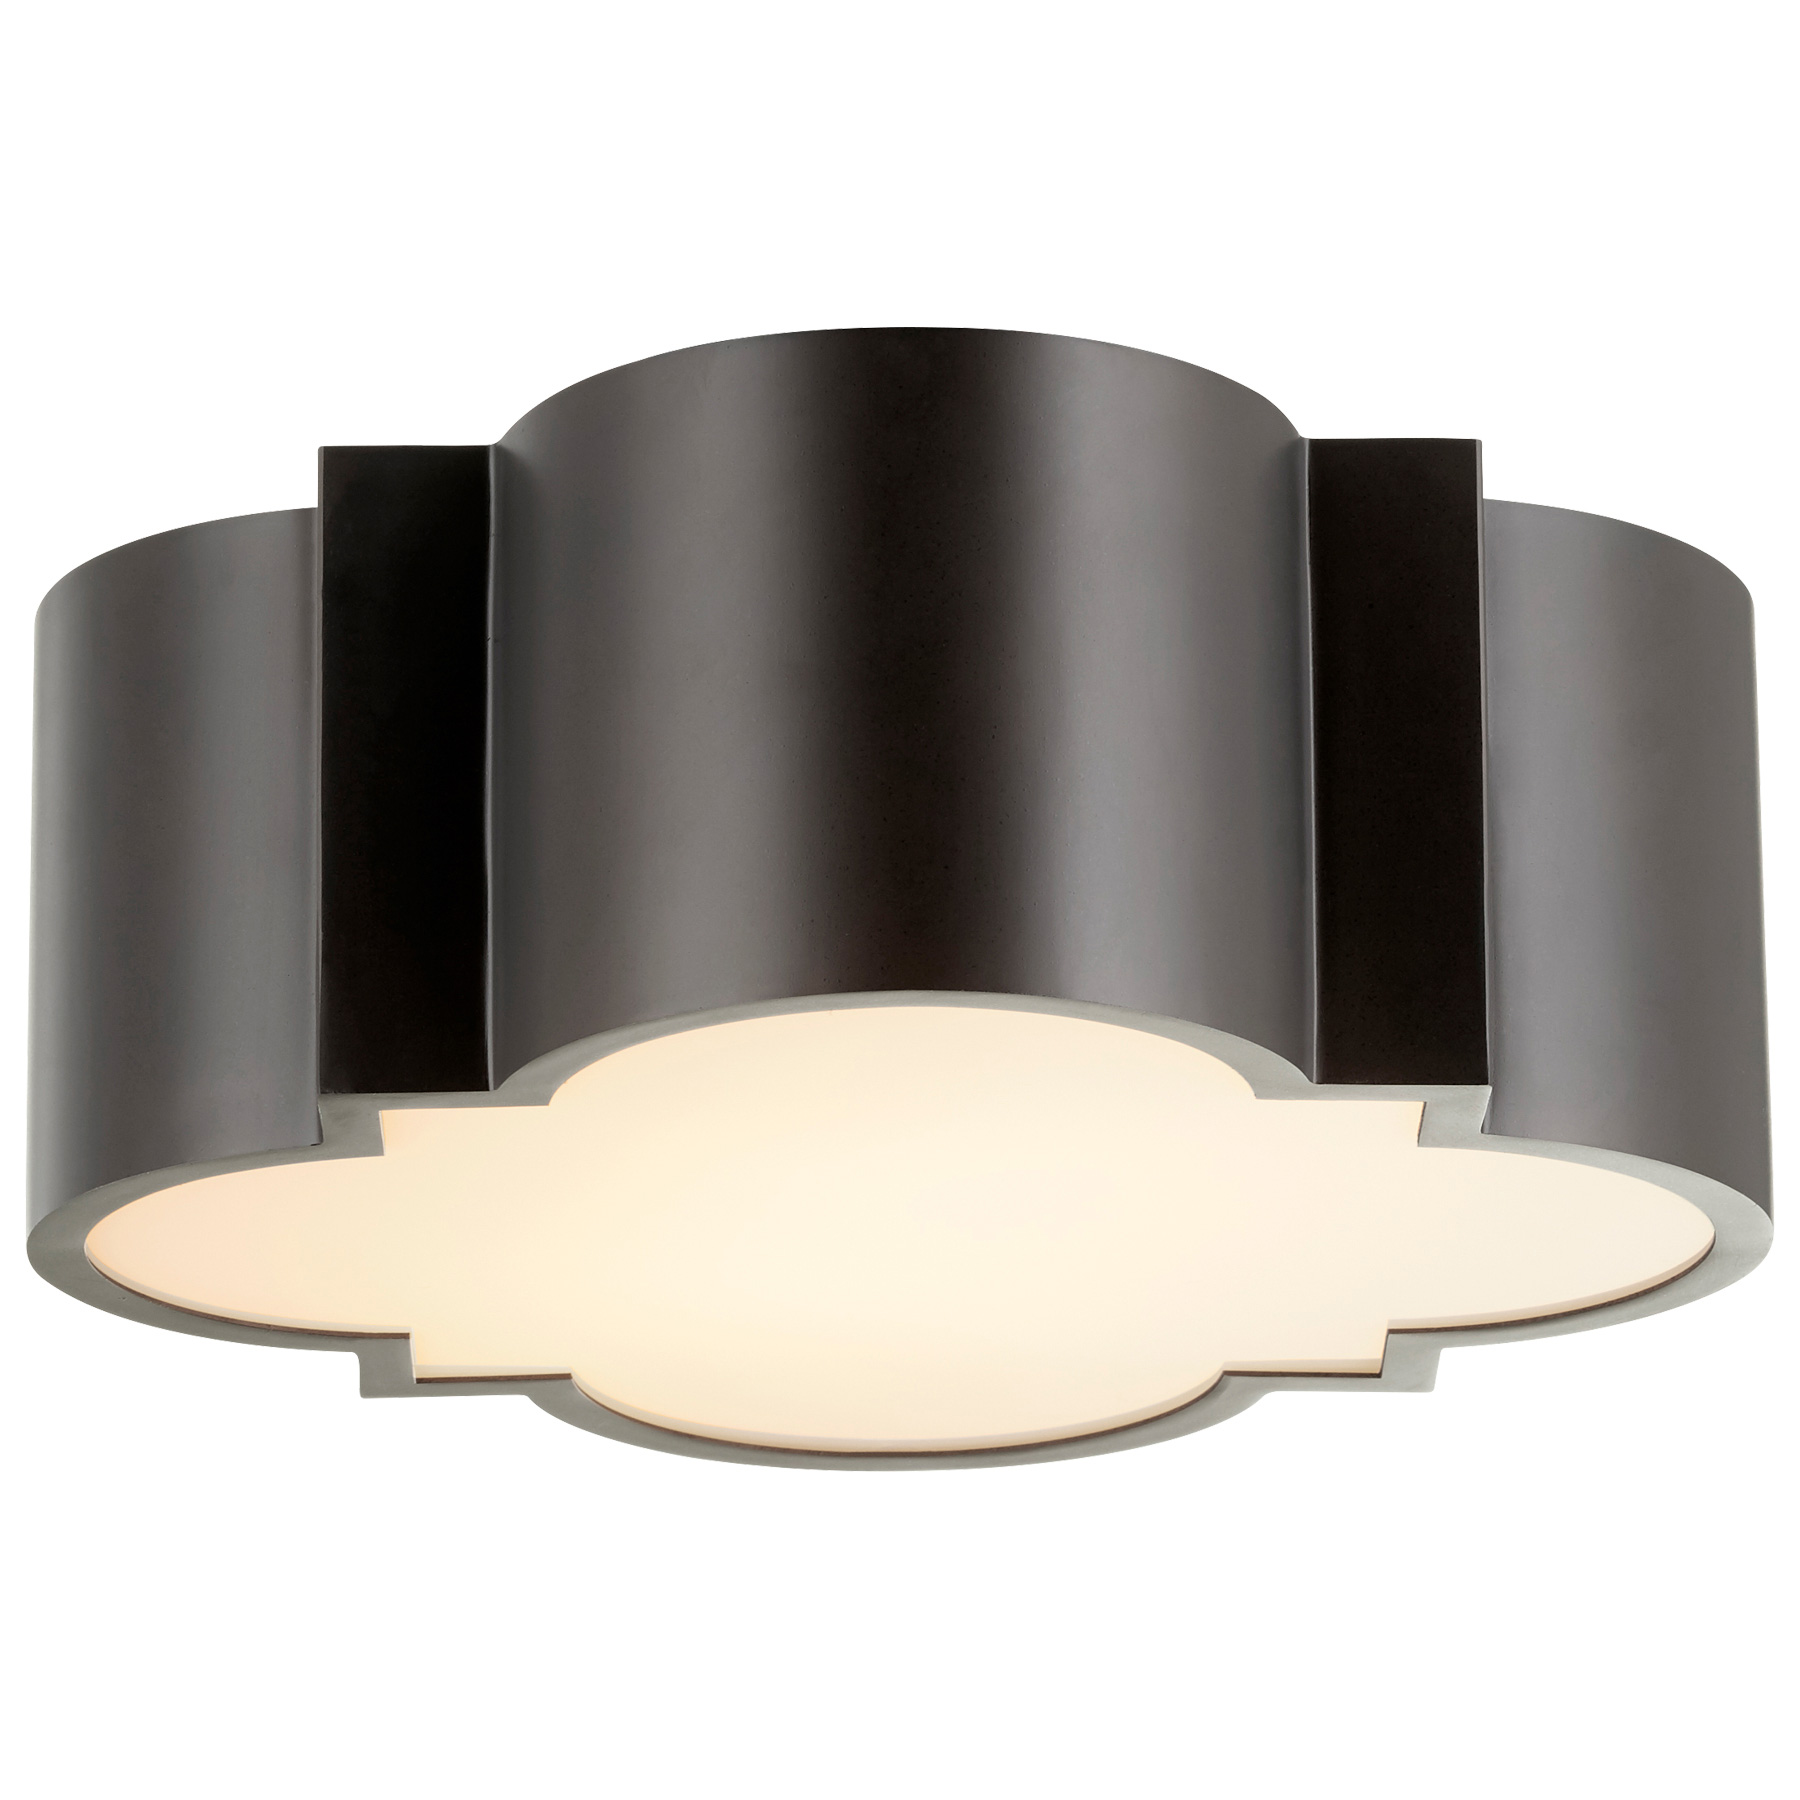 Wyatt Ceiling Light Fixture By Cyan Designs Cy 10065